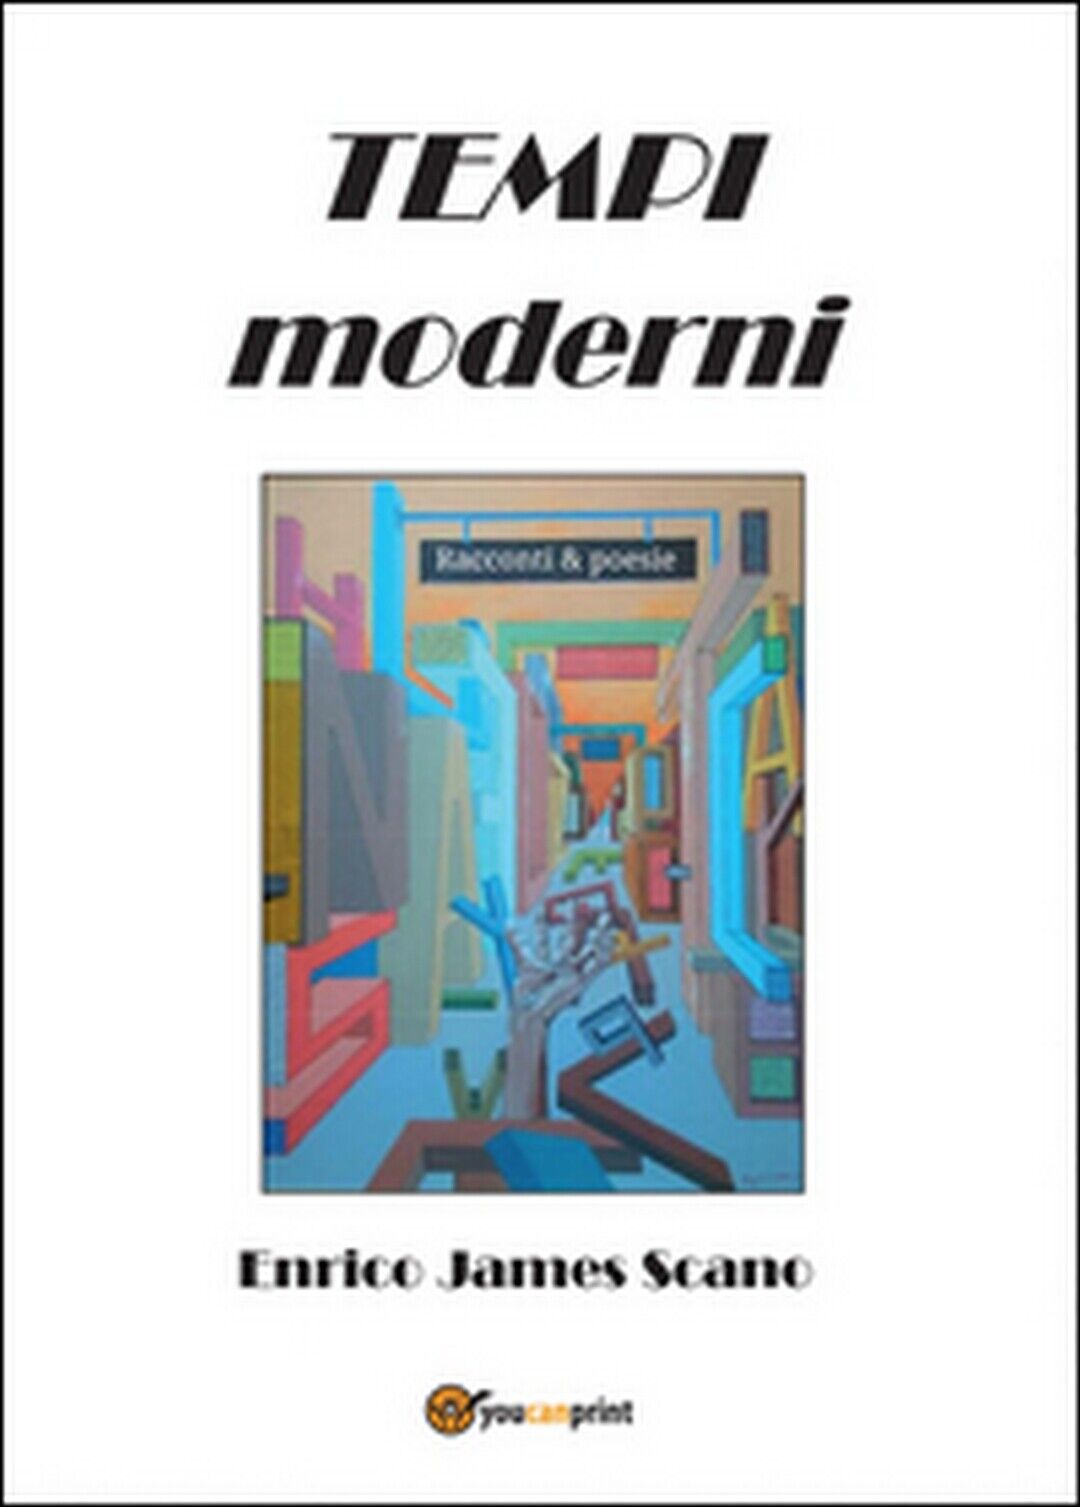 Tempi moderni. Racconti & poesie  di Enrico J. Scano,  2014,  Youcanprint